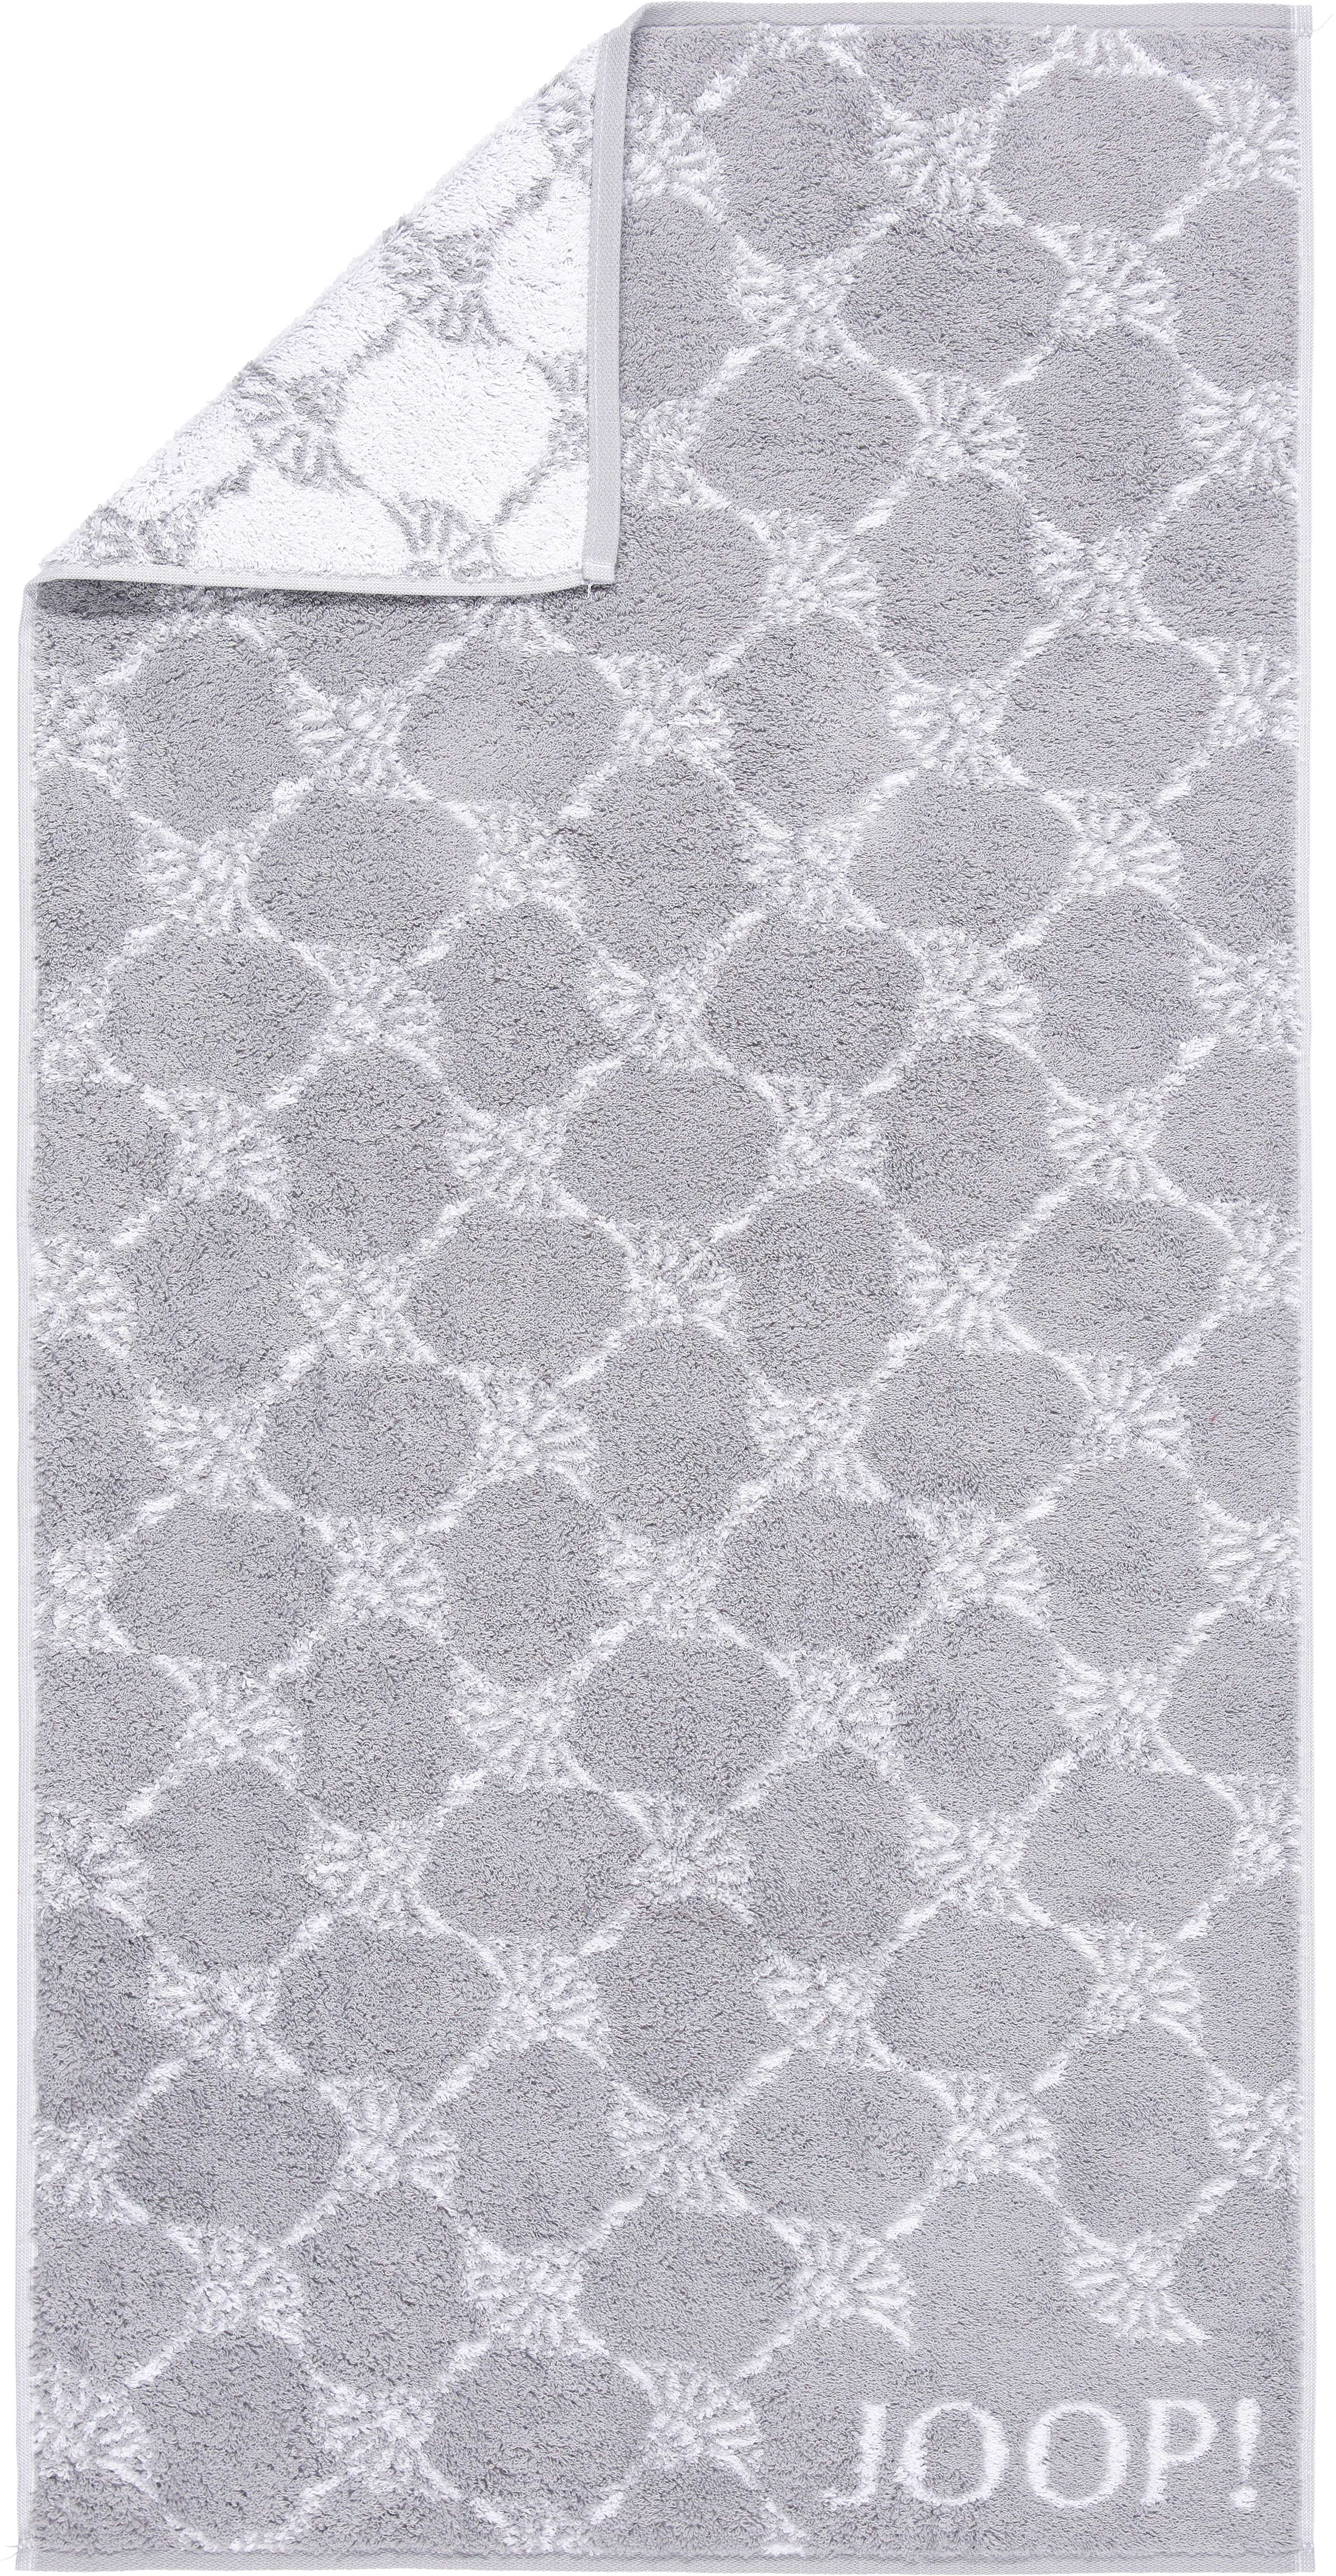 HANDTUCH Classic Cornflower  - Silberfarben, Basics, Textil (50/100cm) - Joop!